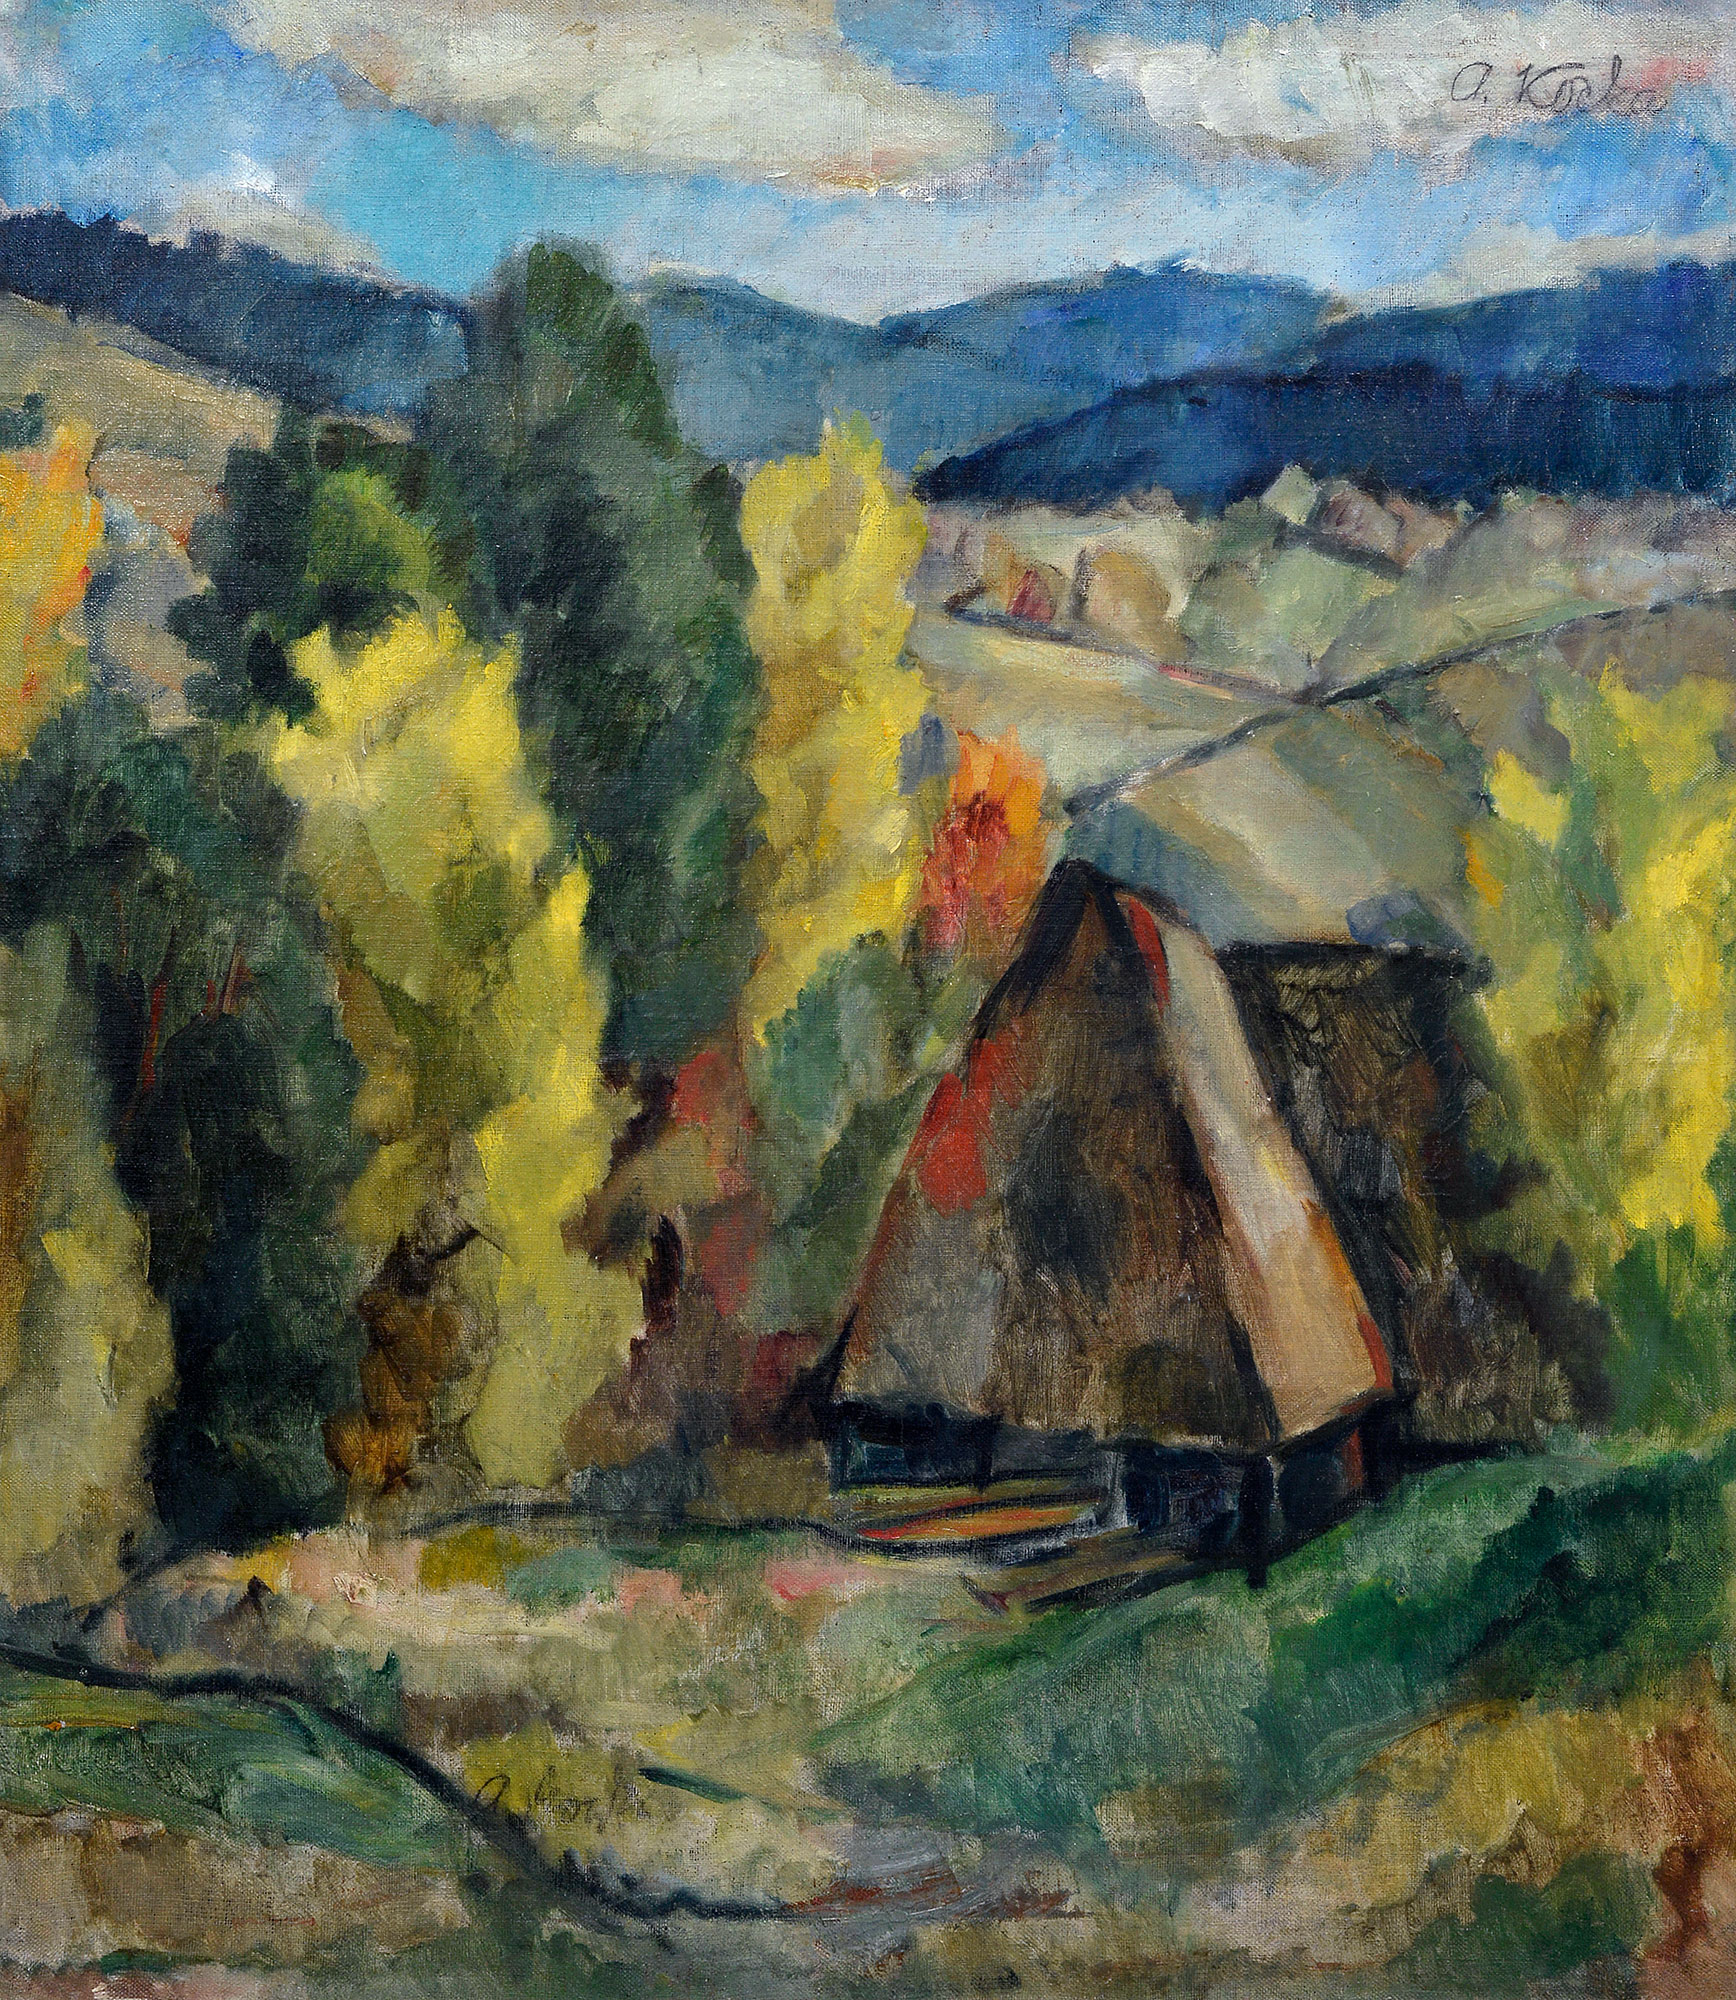 "Uzhok", 1930s